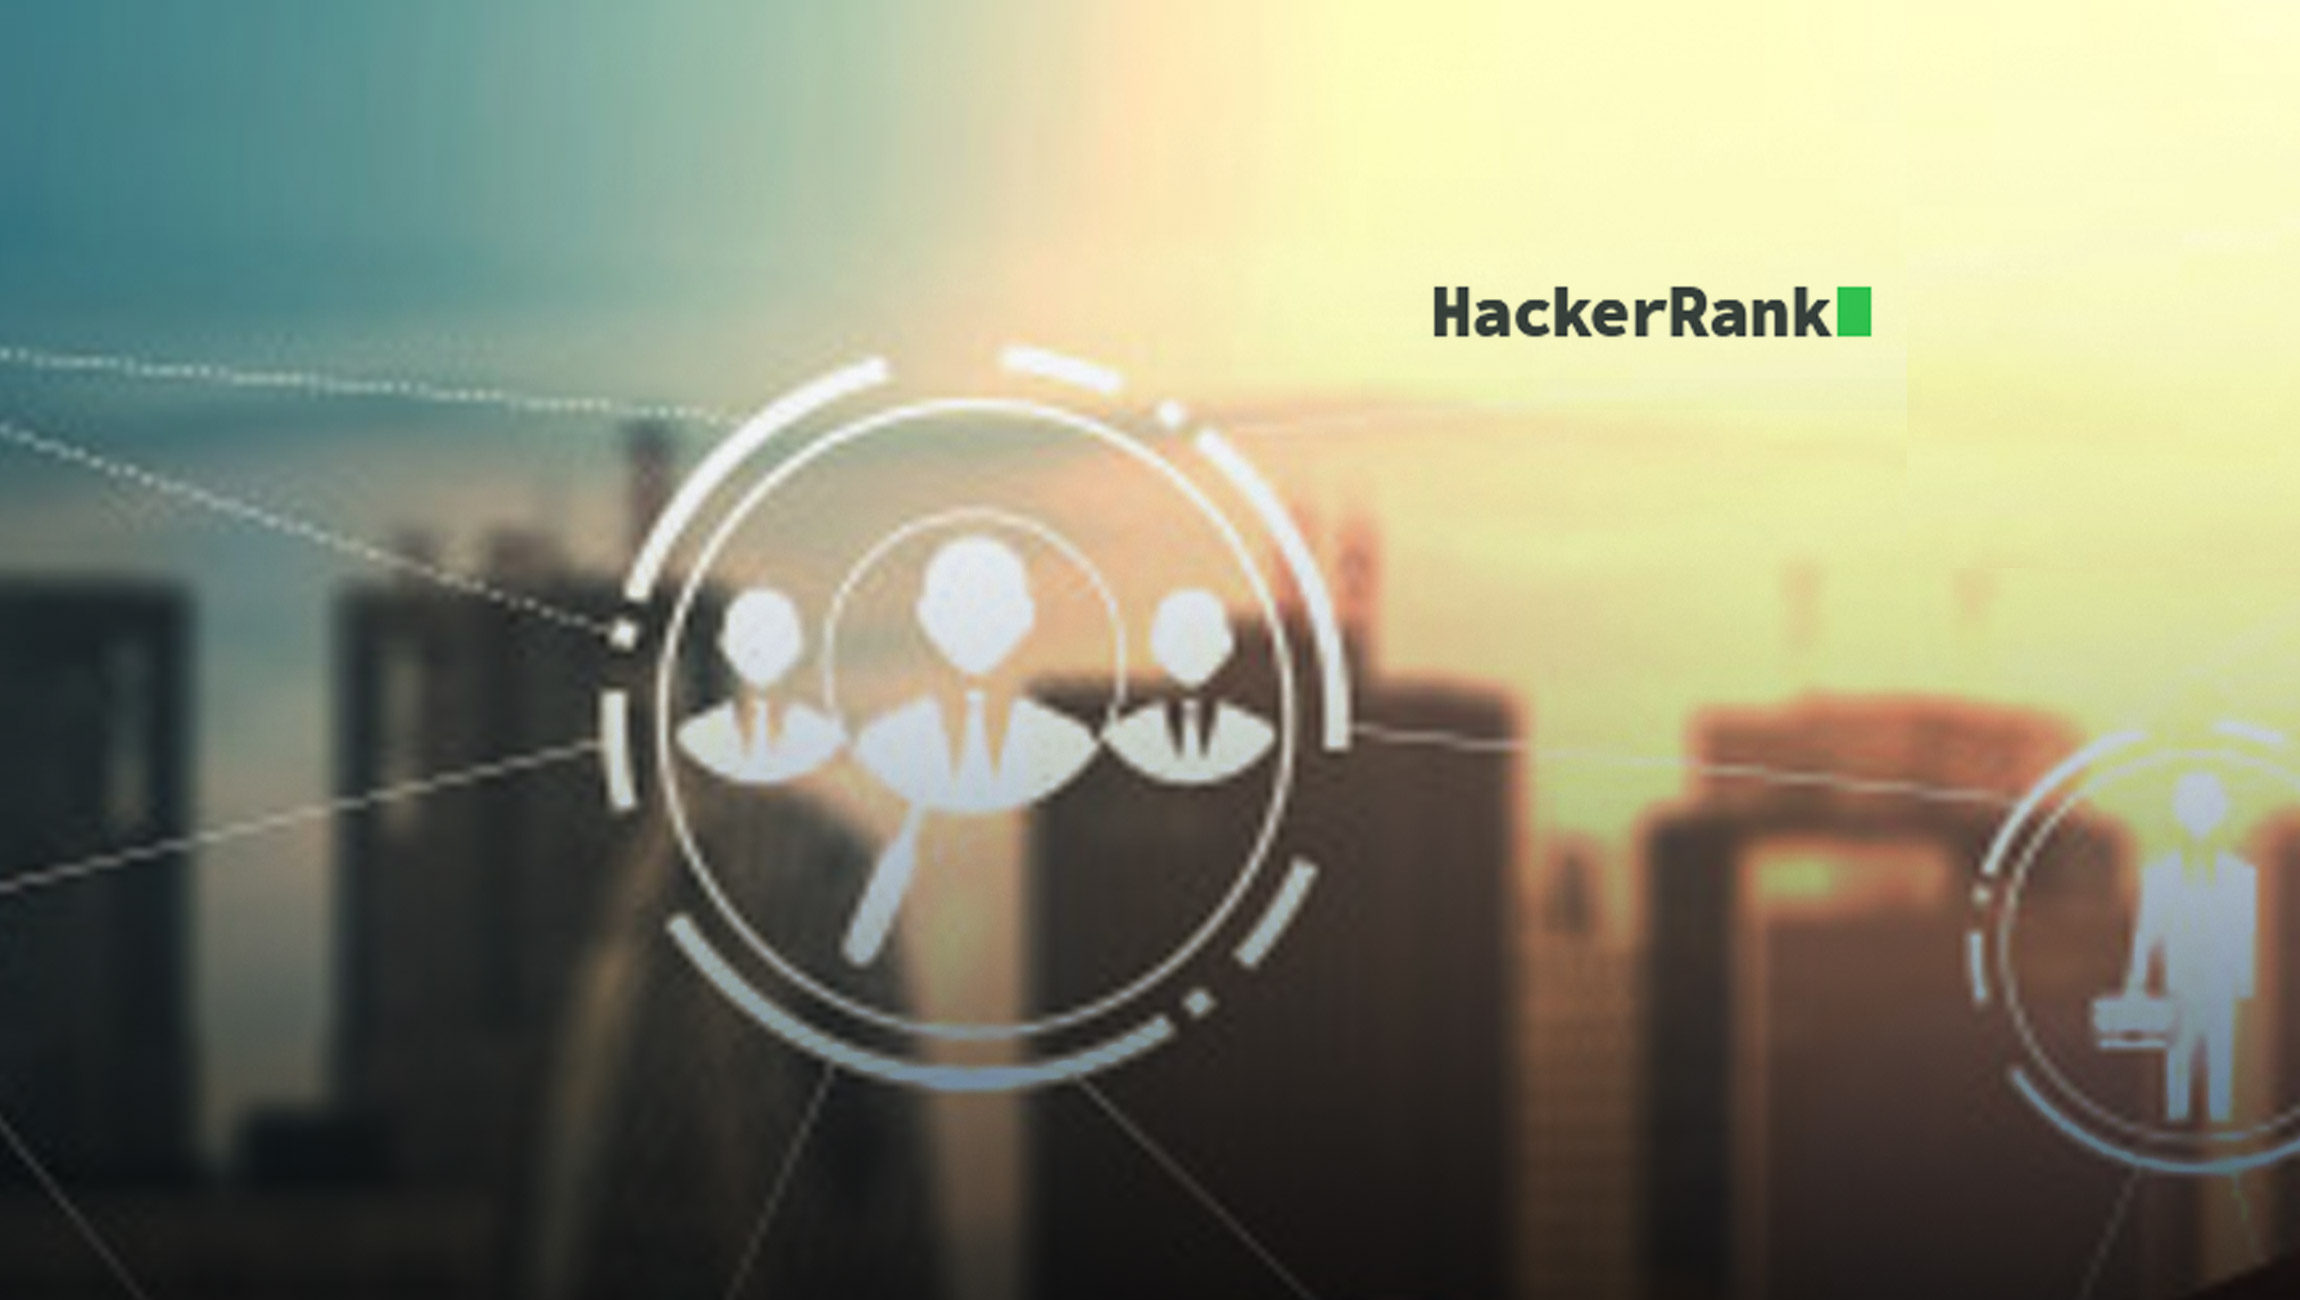 Hackerrank Adds Hbcu Day To Fall Virtual Career Fair - roblox internship code assessment